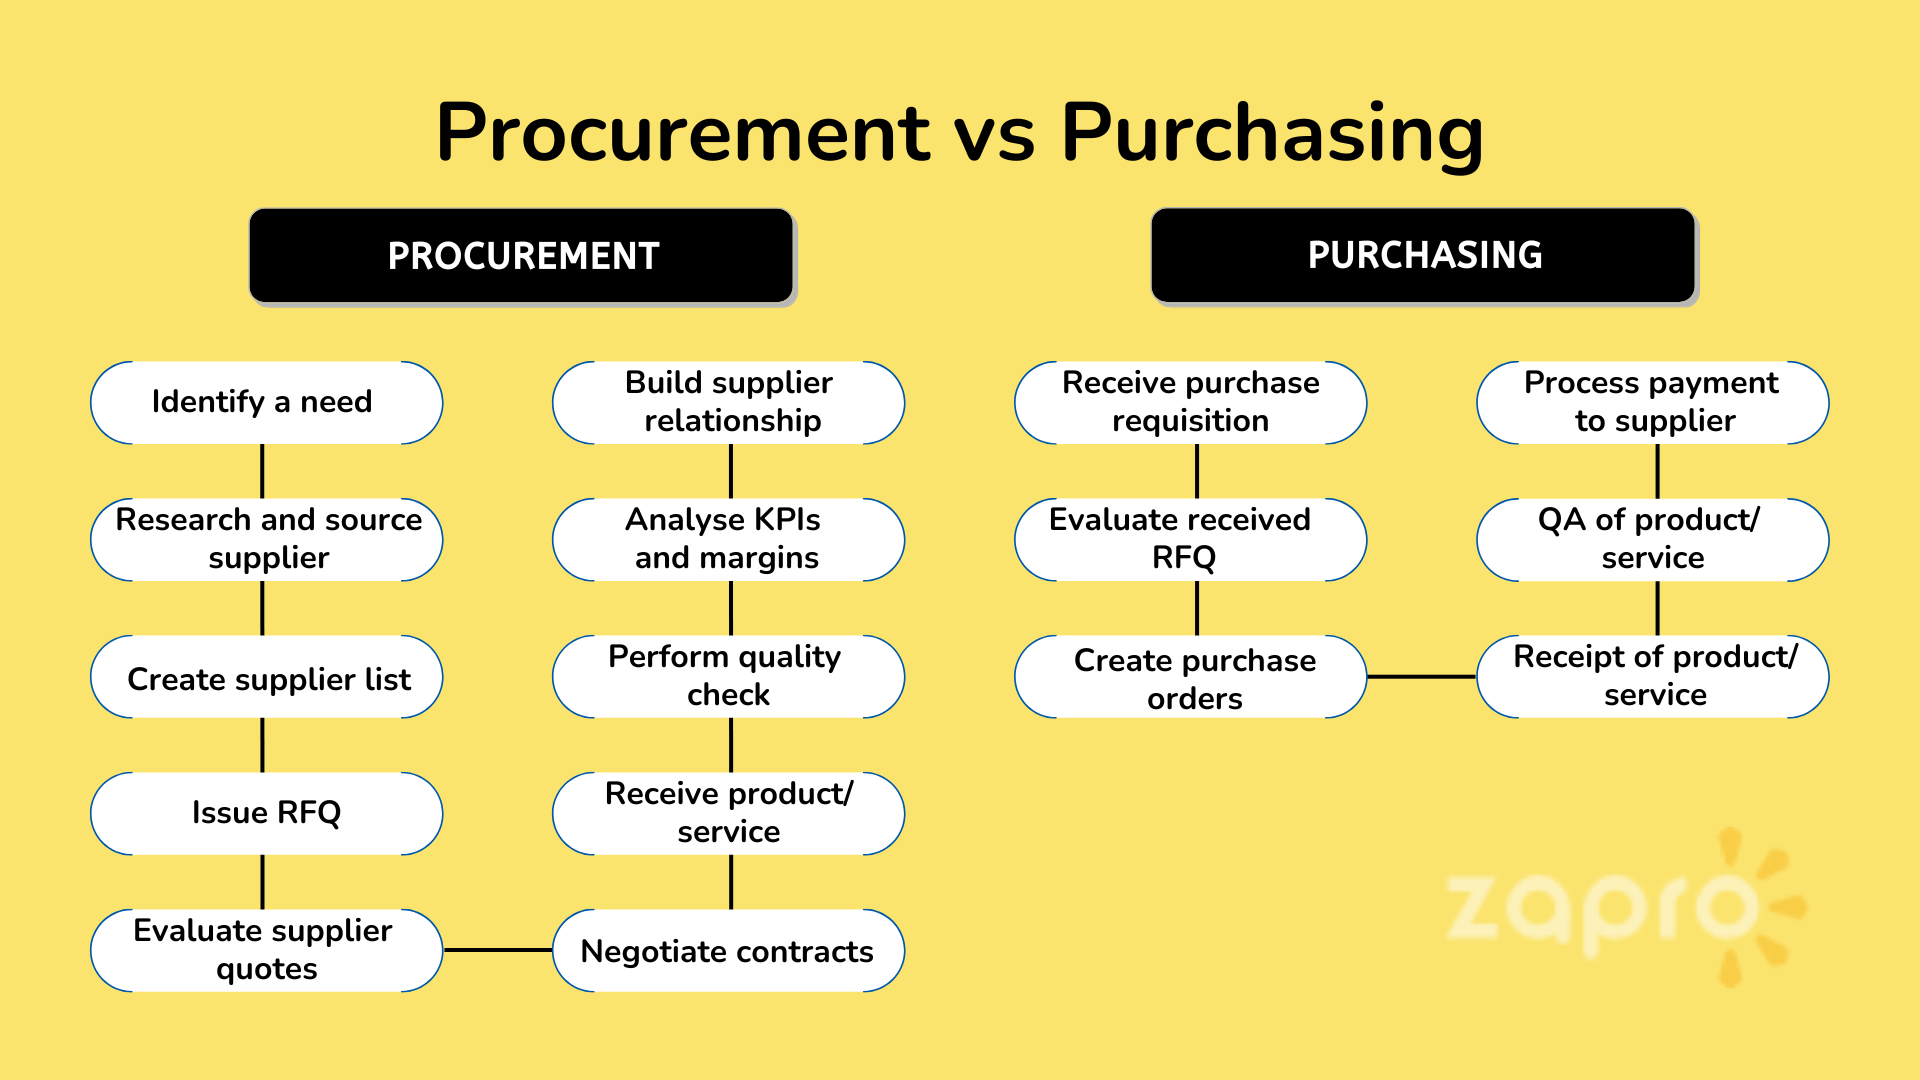 Procurement vs Purchasing